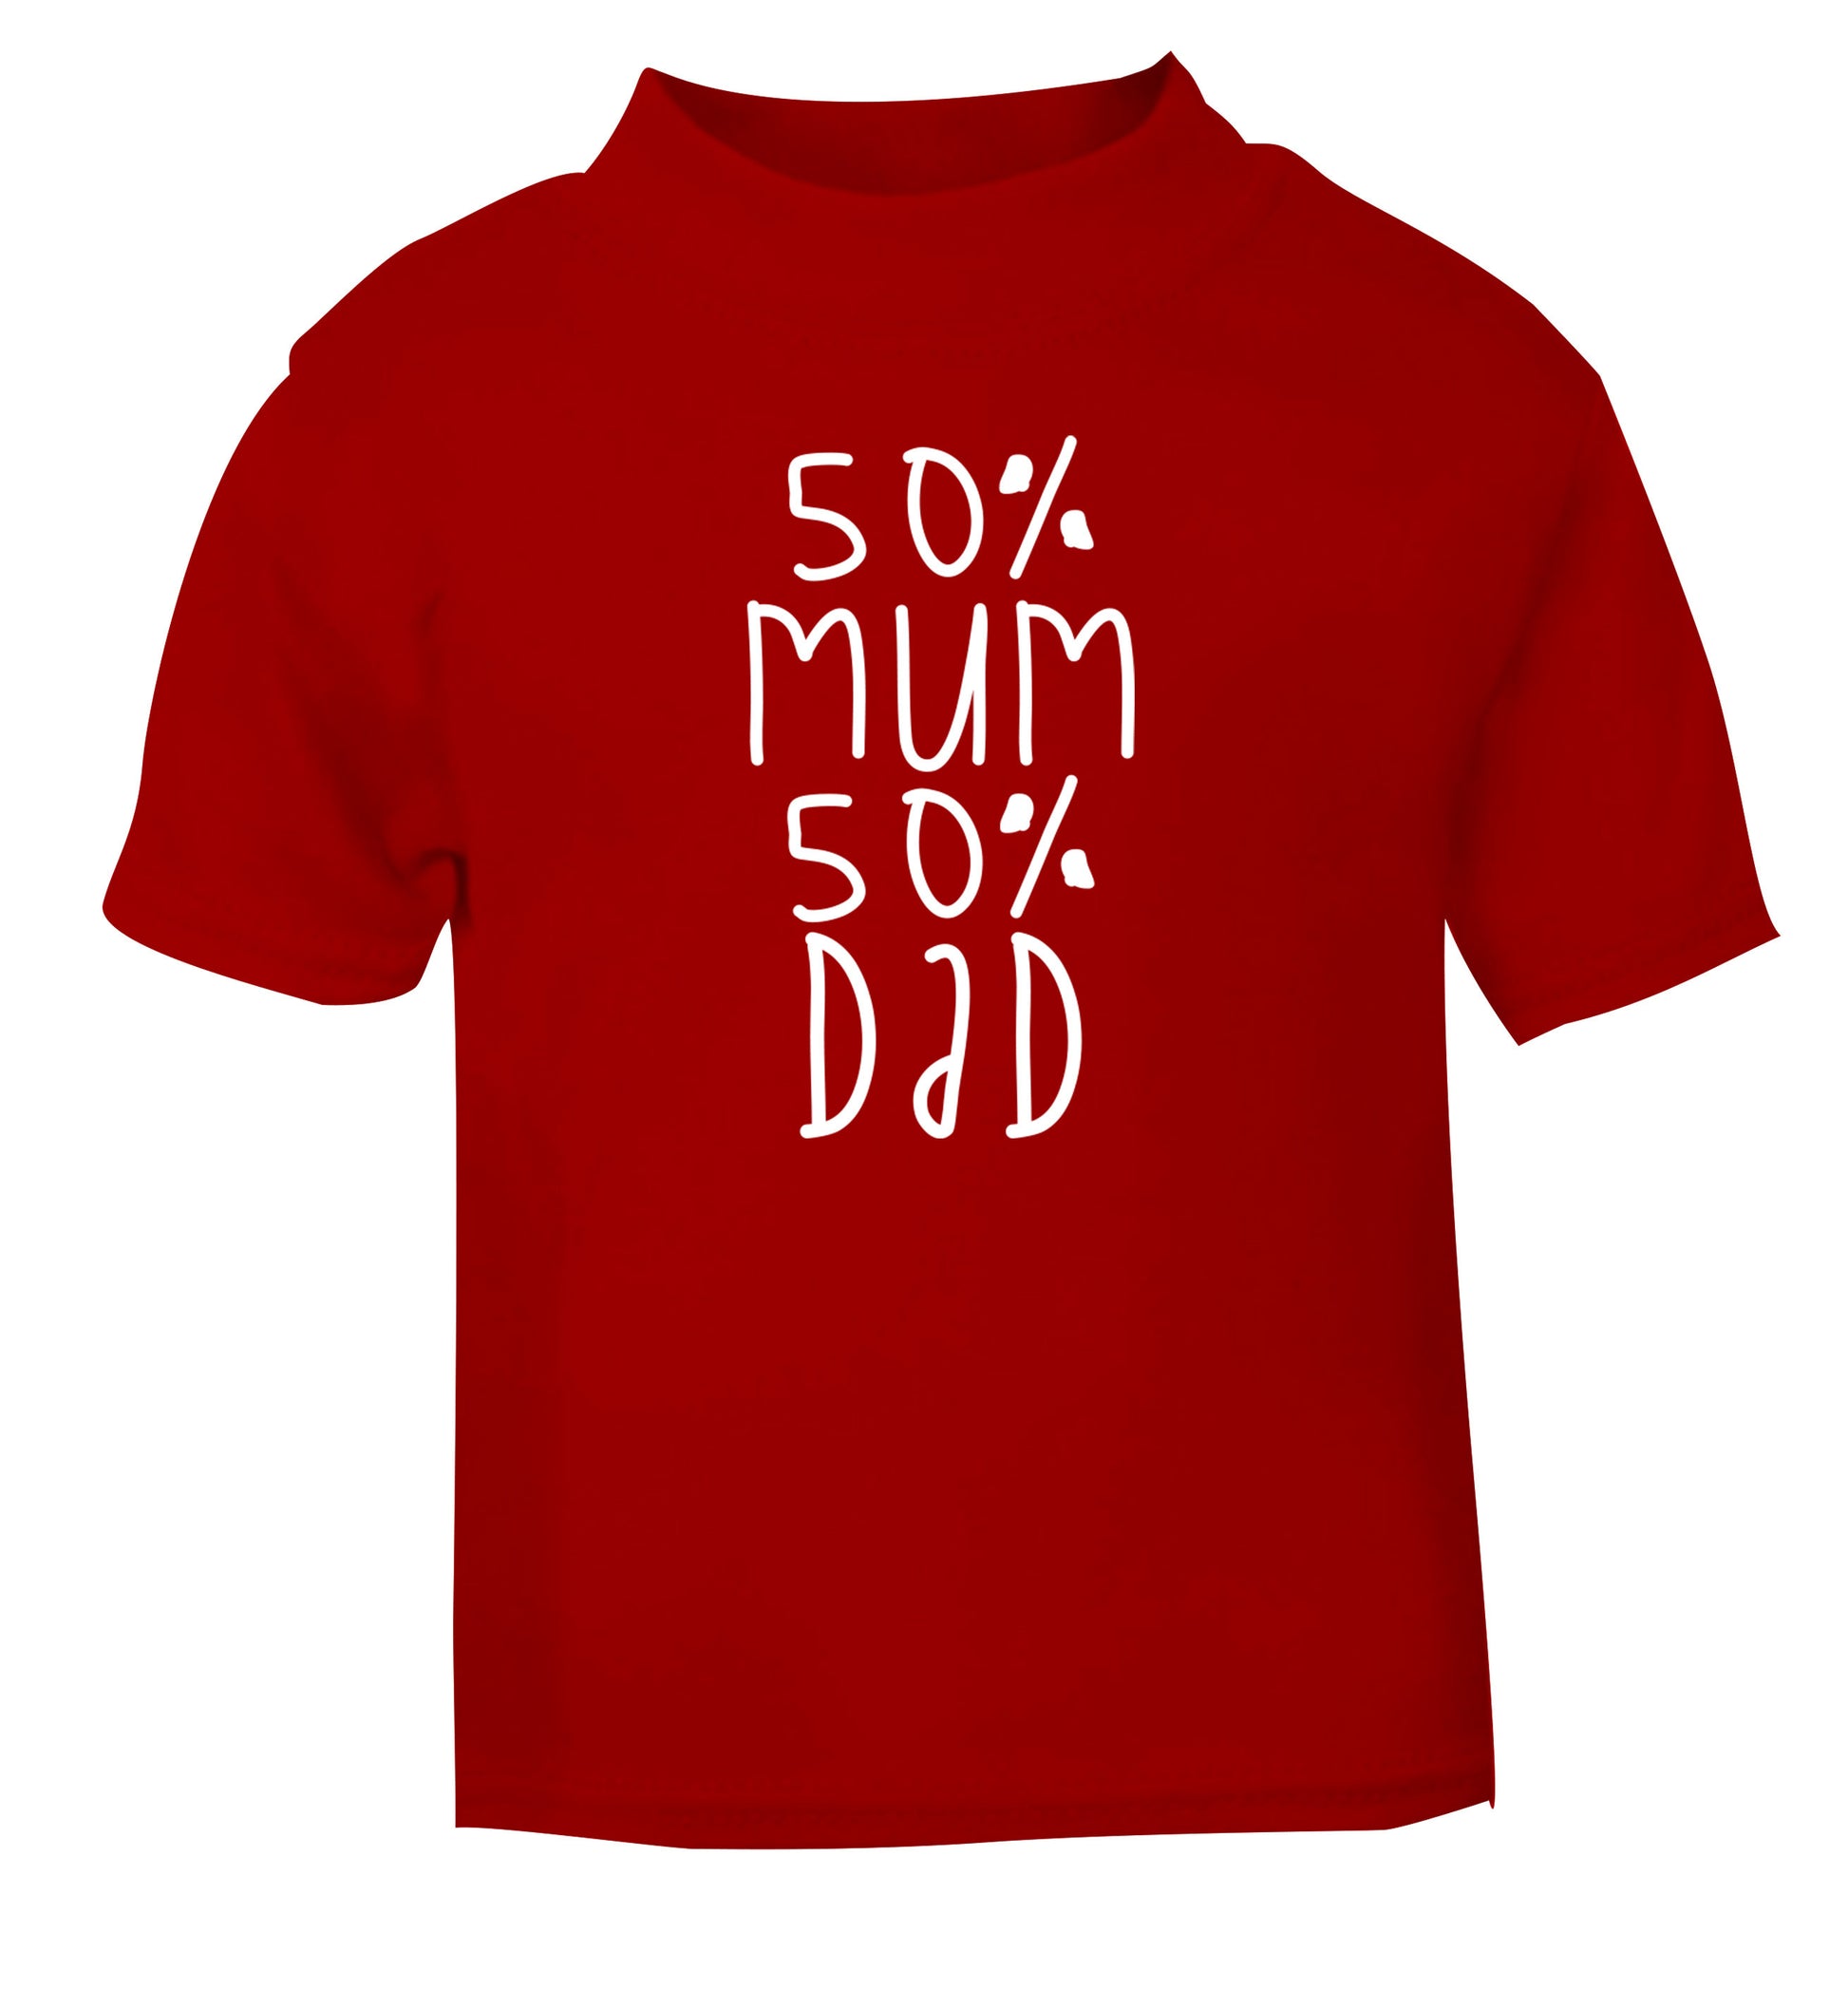 50% mum 50% dad red Baby Toddler Tshirt 2 Years